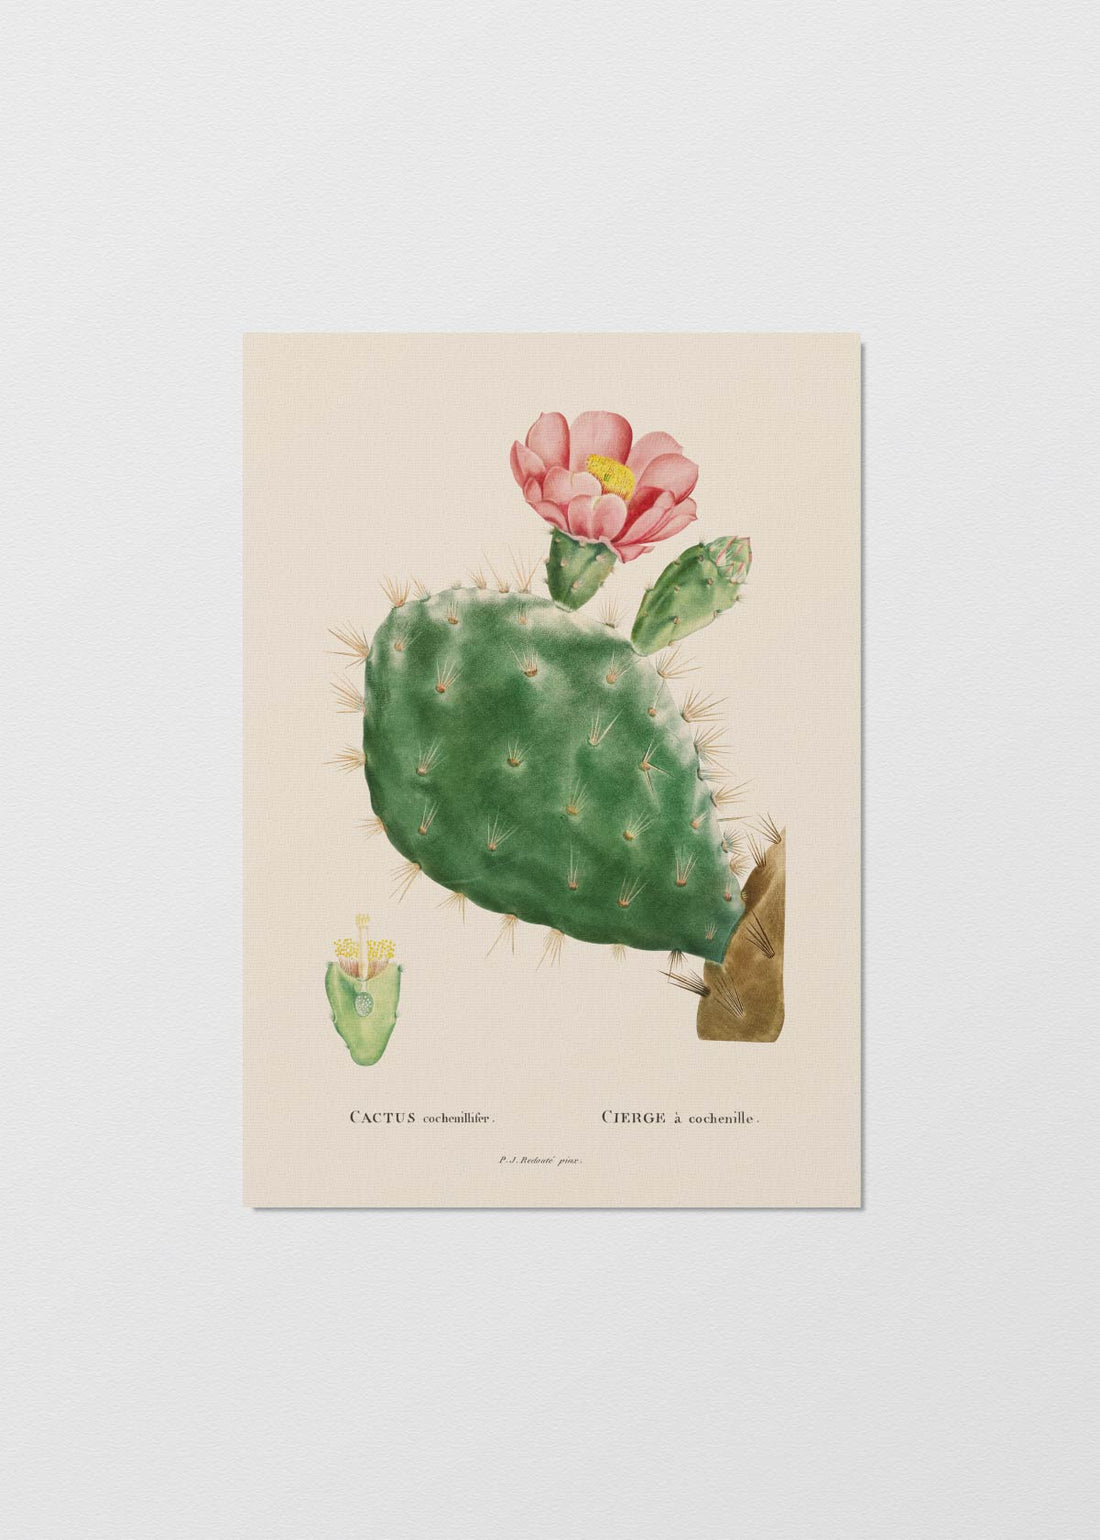 Cactus Cochenillifer - Testimoniaprints